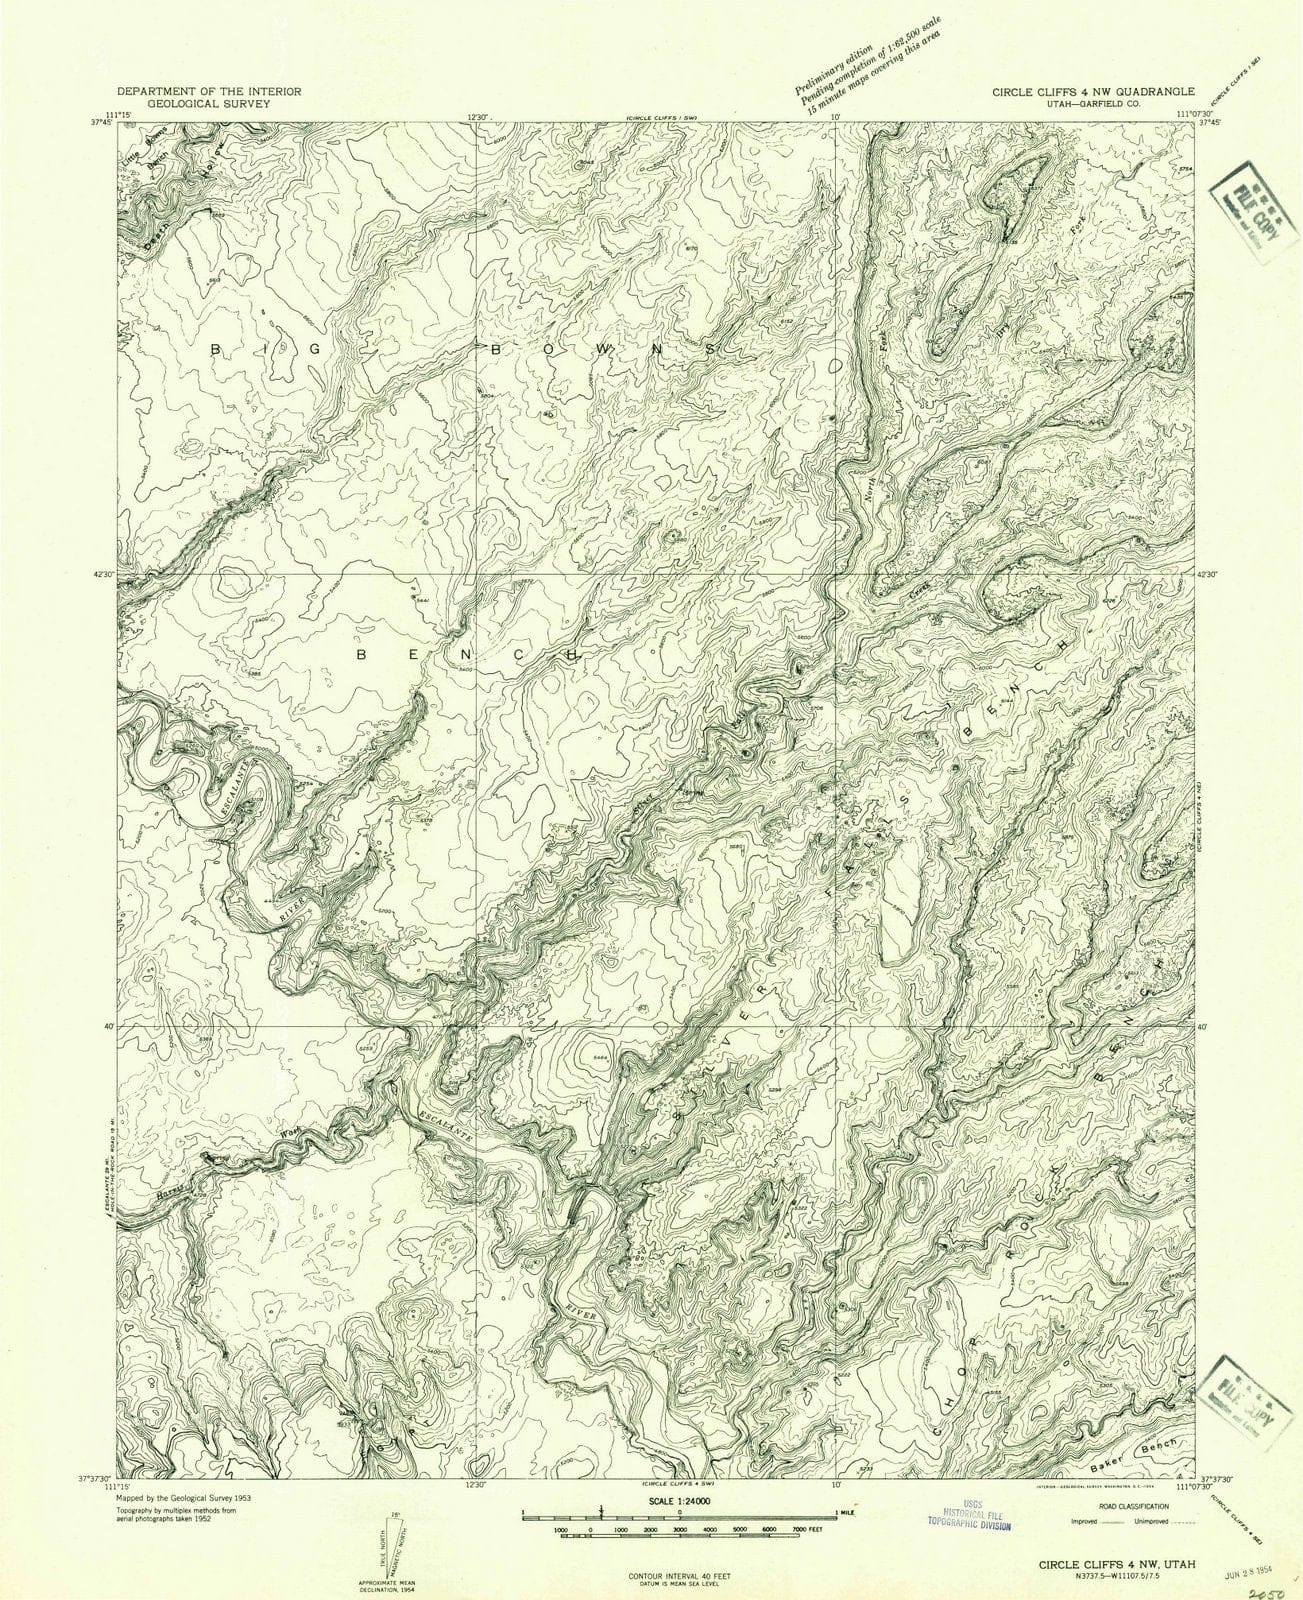 1953 Circle Cliffs 4, UT - Utah - USGS Topographic Map v2